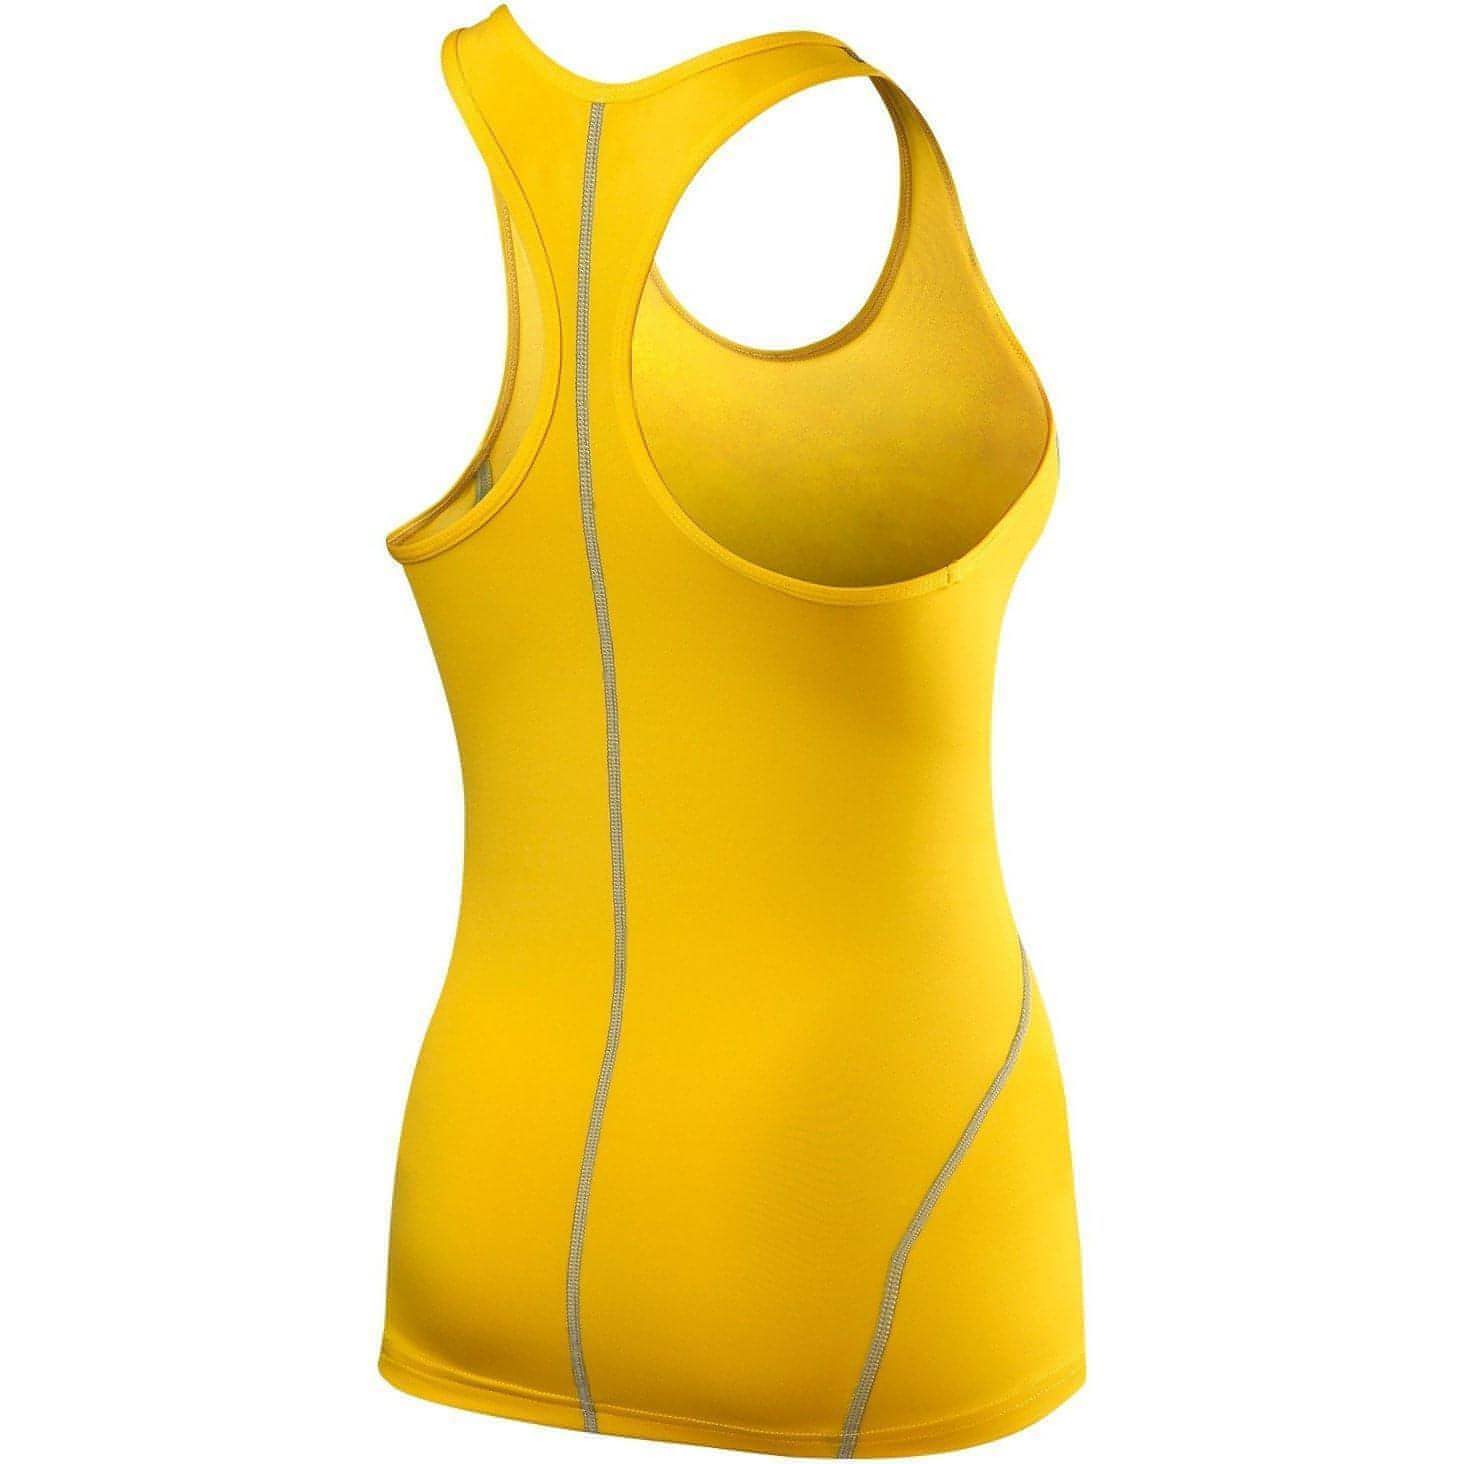 TCA Pro Performance Womens Running Vest Tank Top - Yellow - Start Fitness